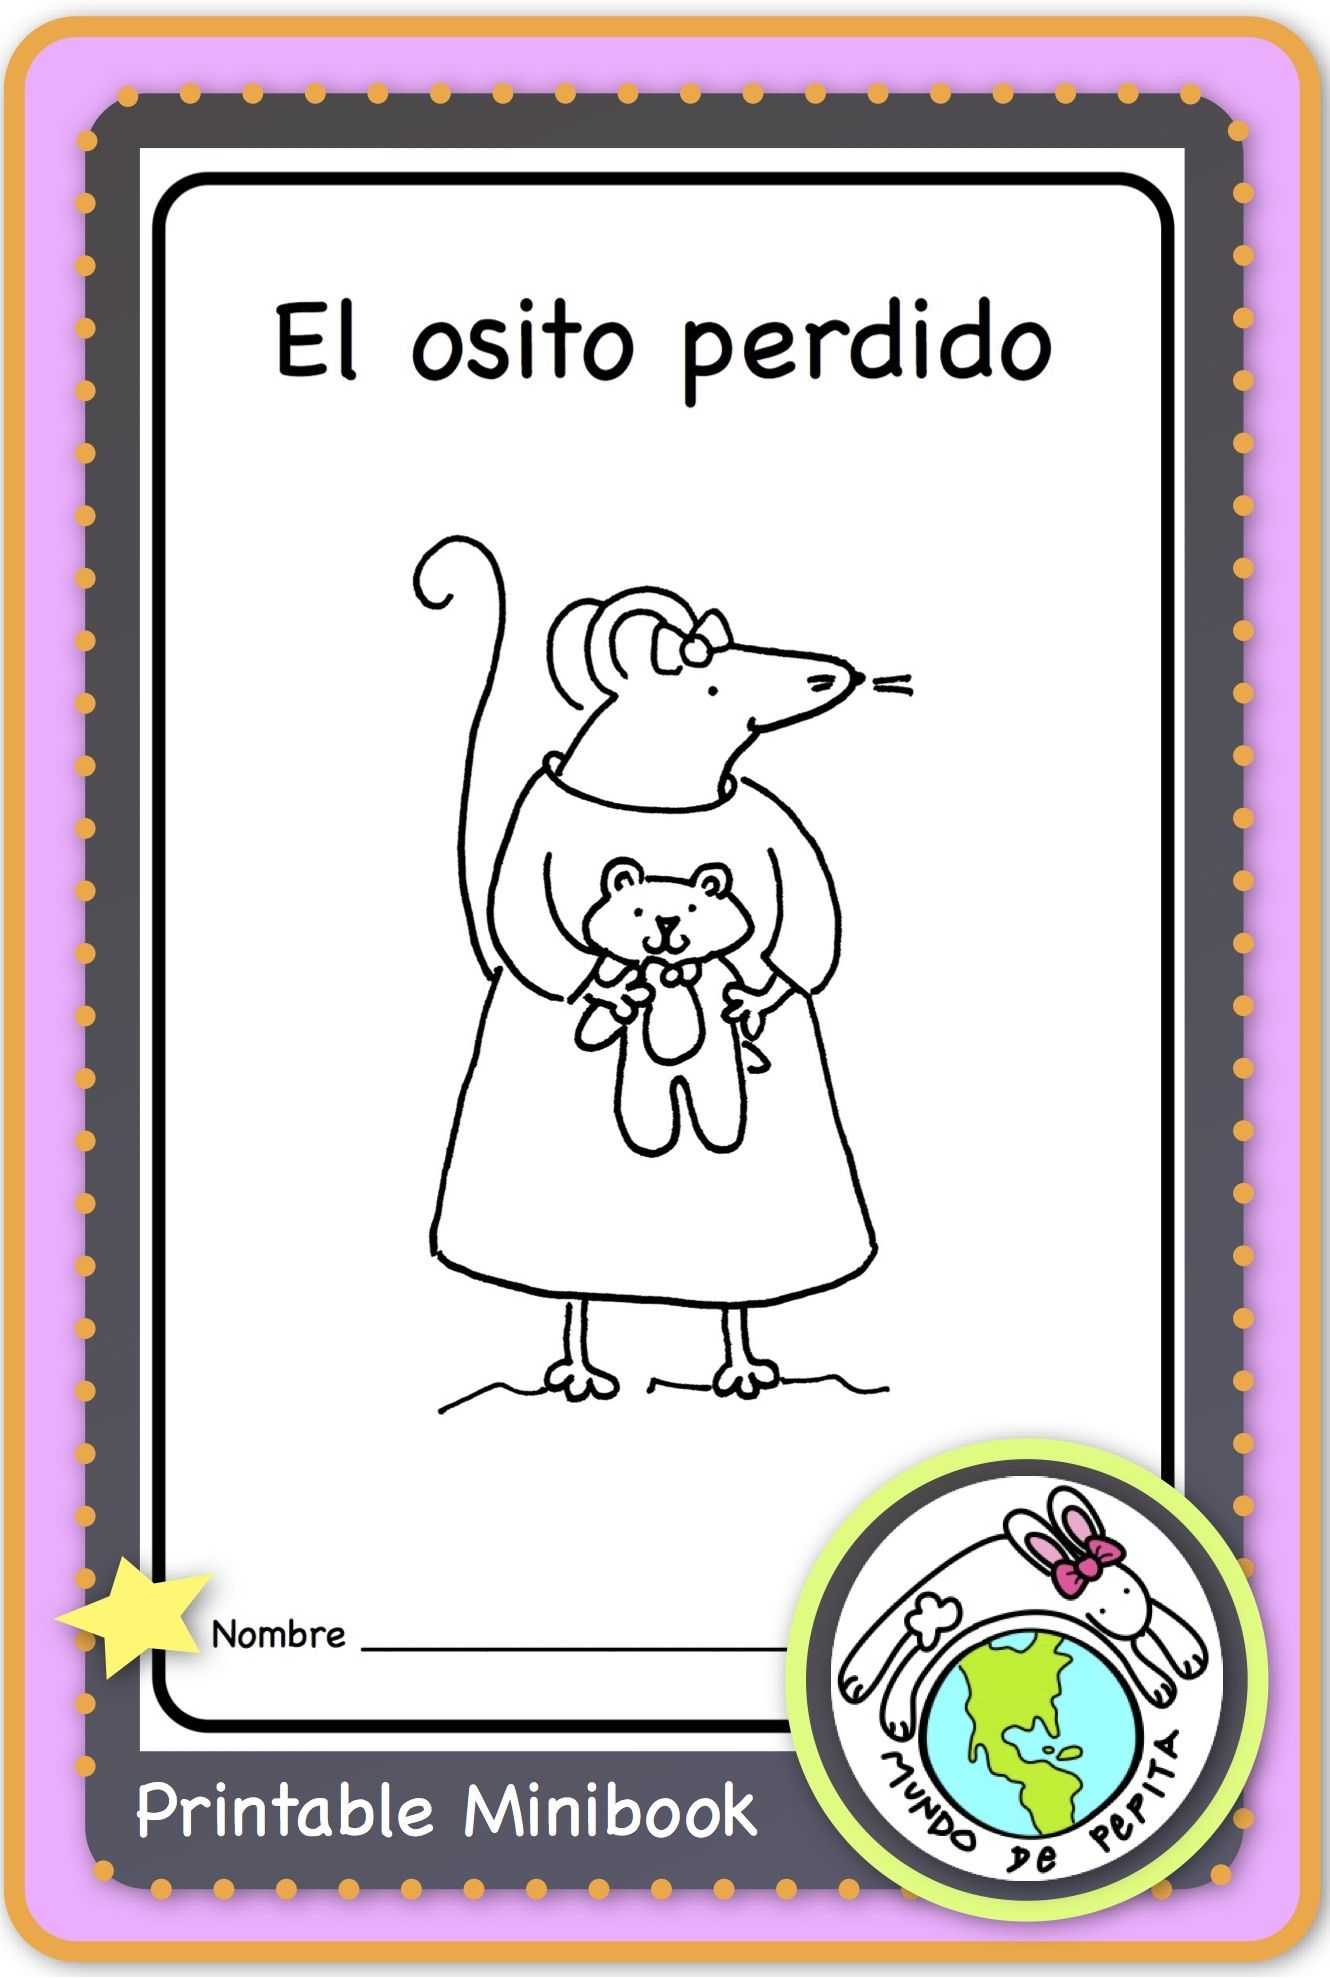 Spanish Lesson Worksheets with El Osito Perdido Printable Spanish Minibook House Vocab La Casa